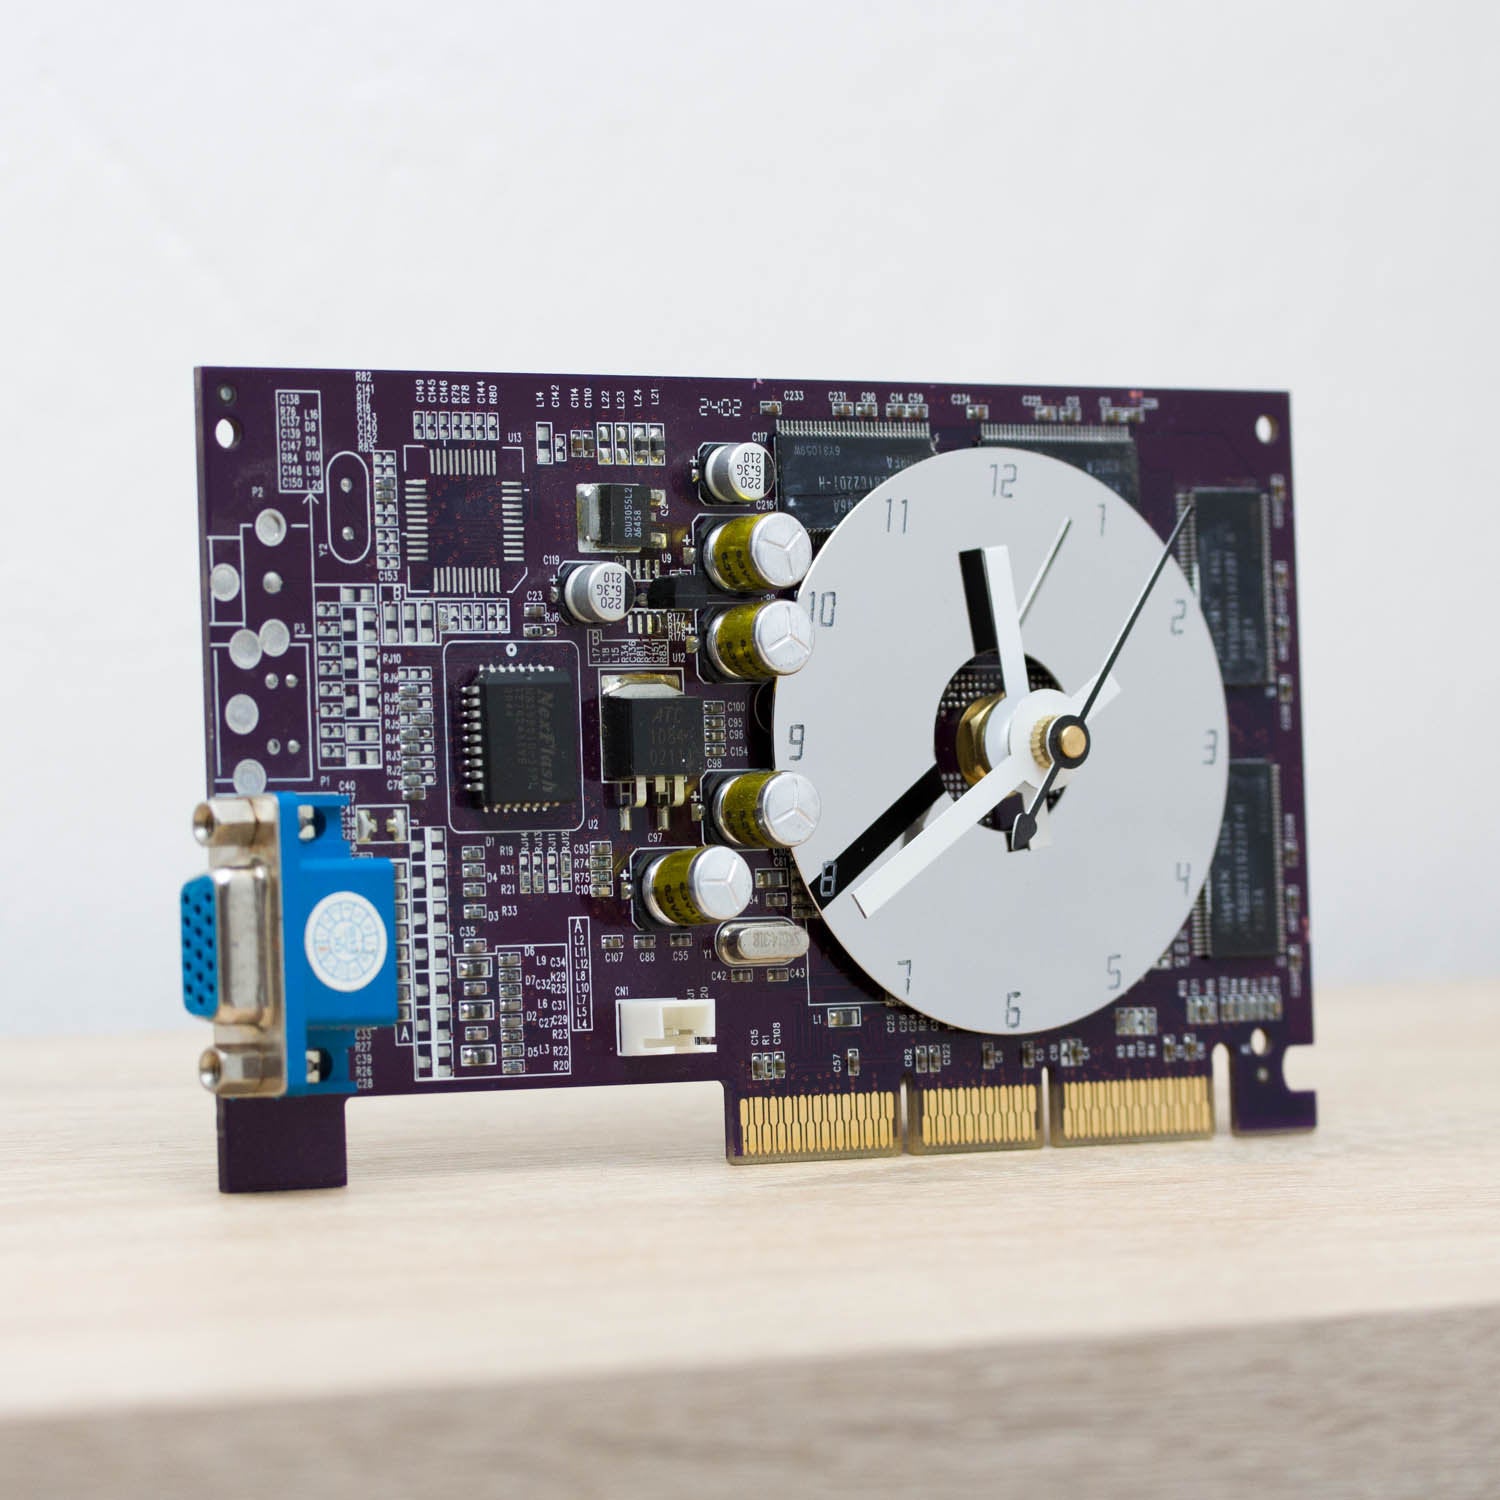 Desk clock - Recycled slim graphics card clock, unique office clock, purple circuit board